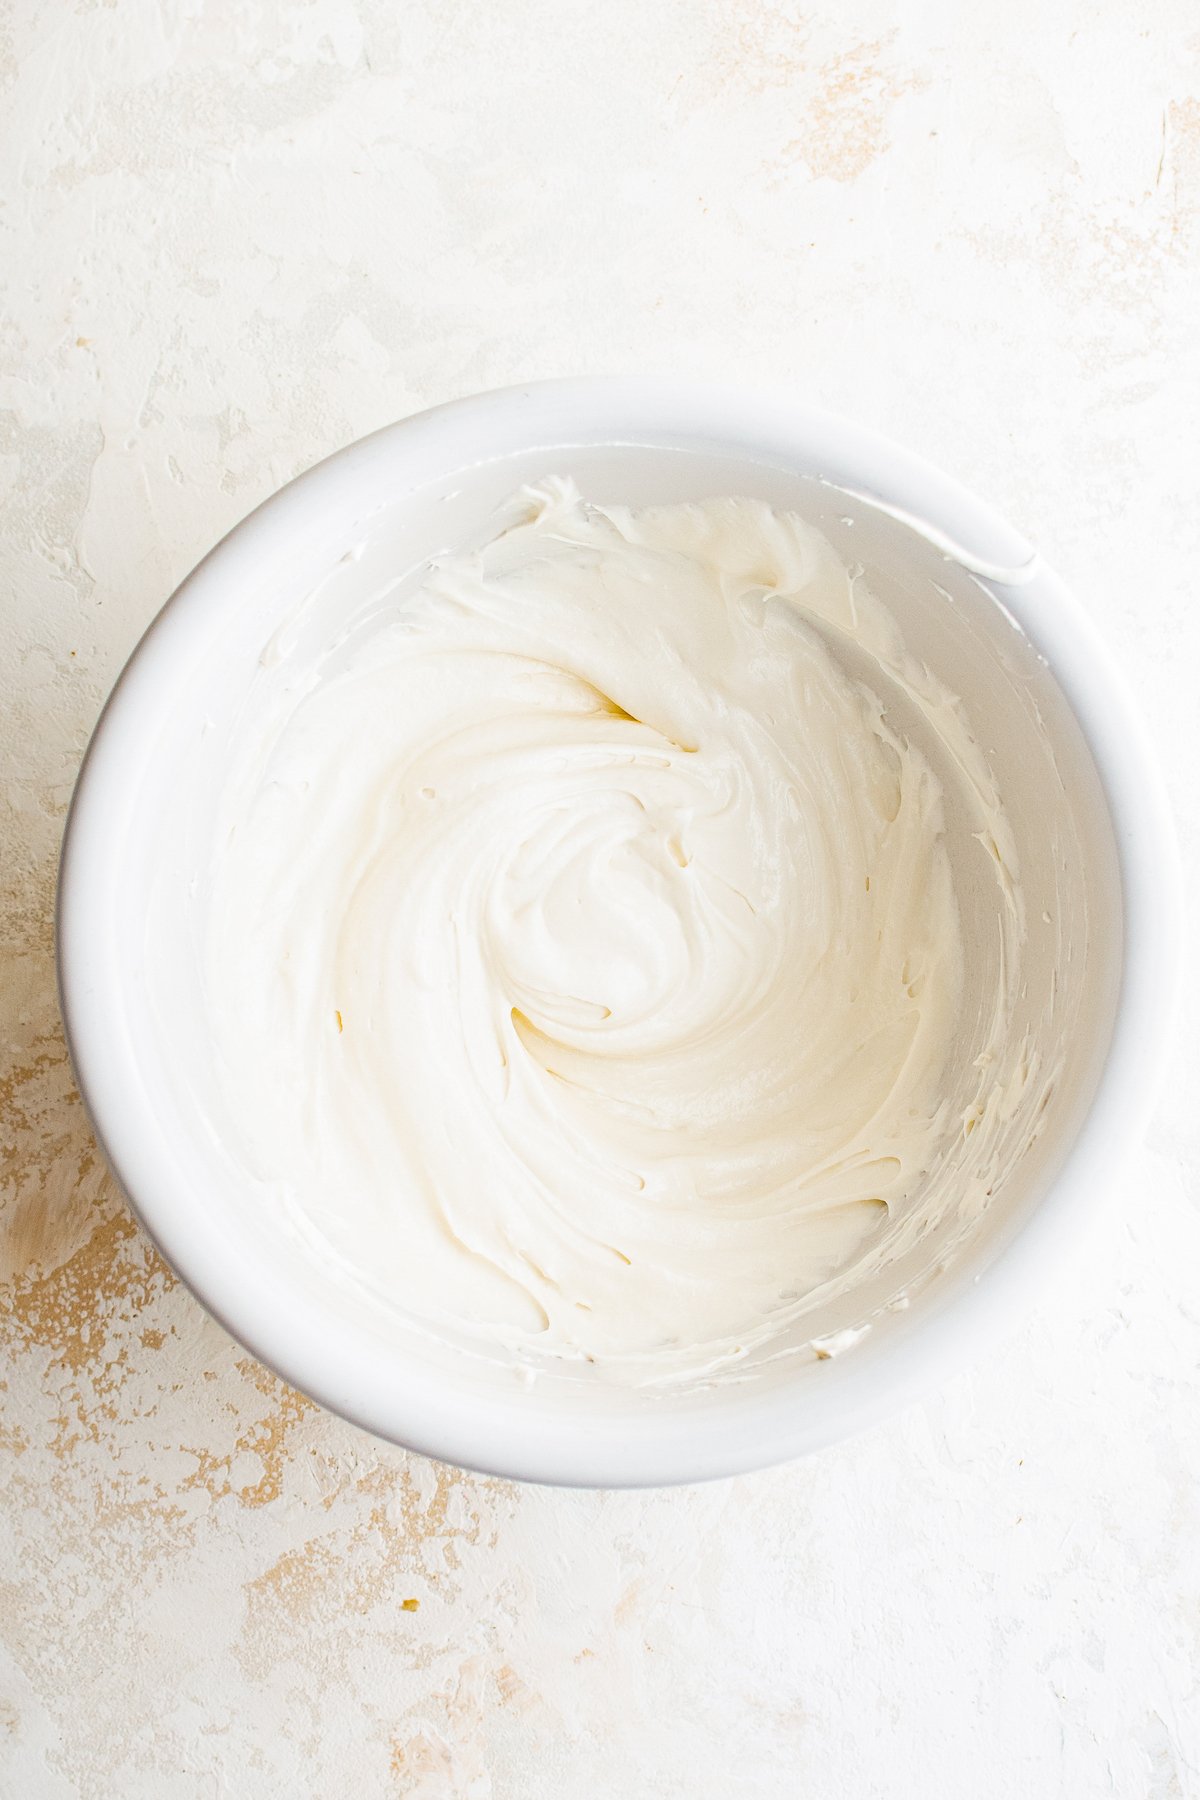 Marshmallow fluff folded into vanilla whipped cream cheese.